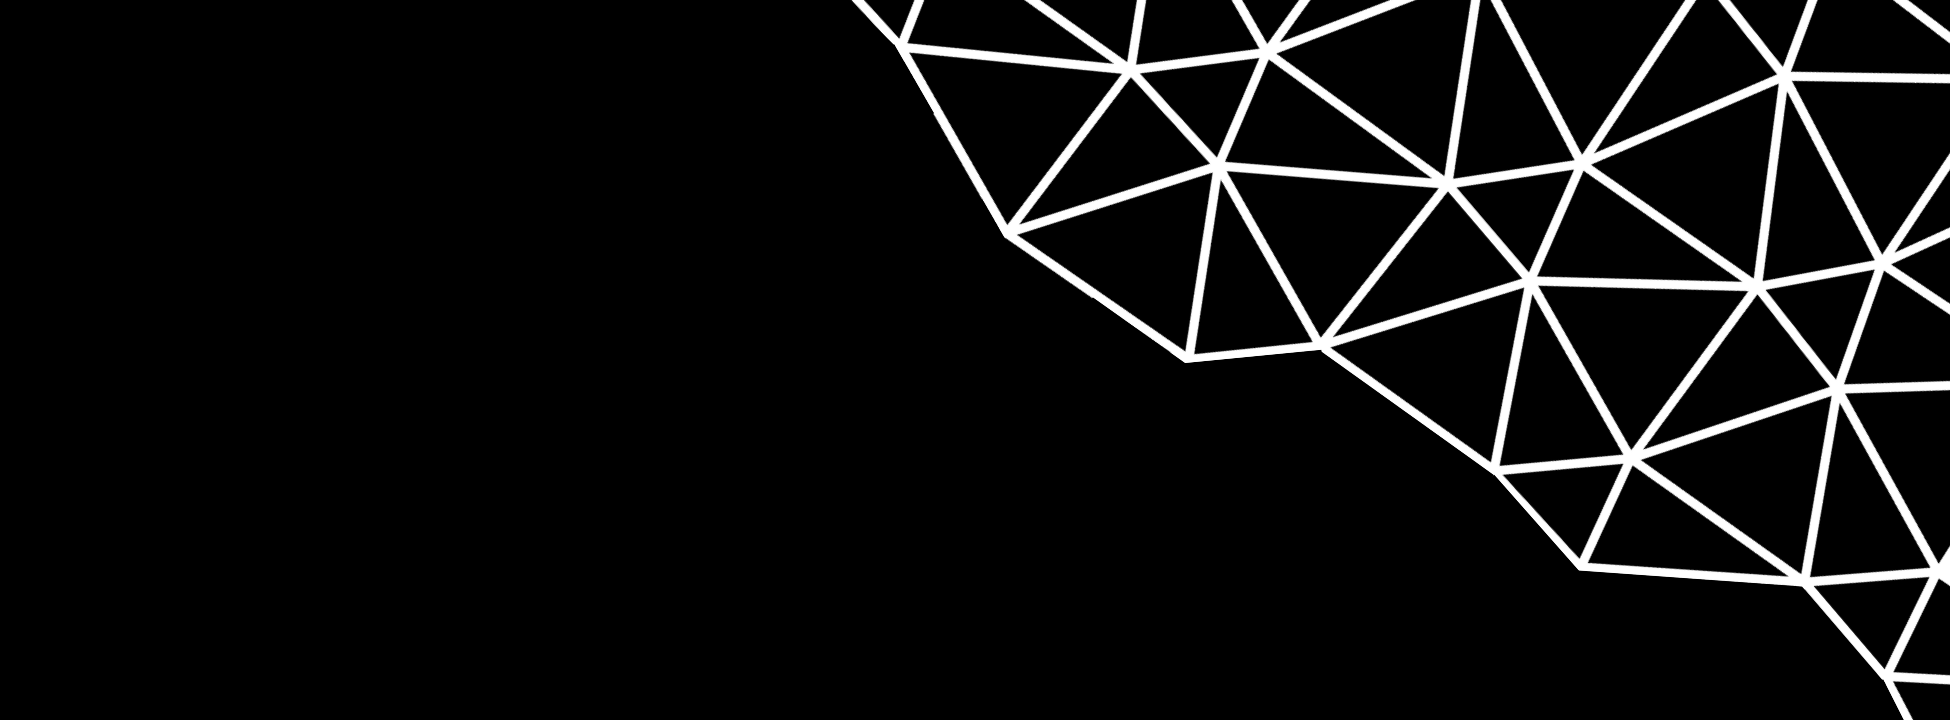 This is Lassonde: Podcast artwork - Geometric design